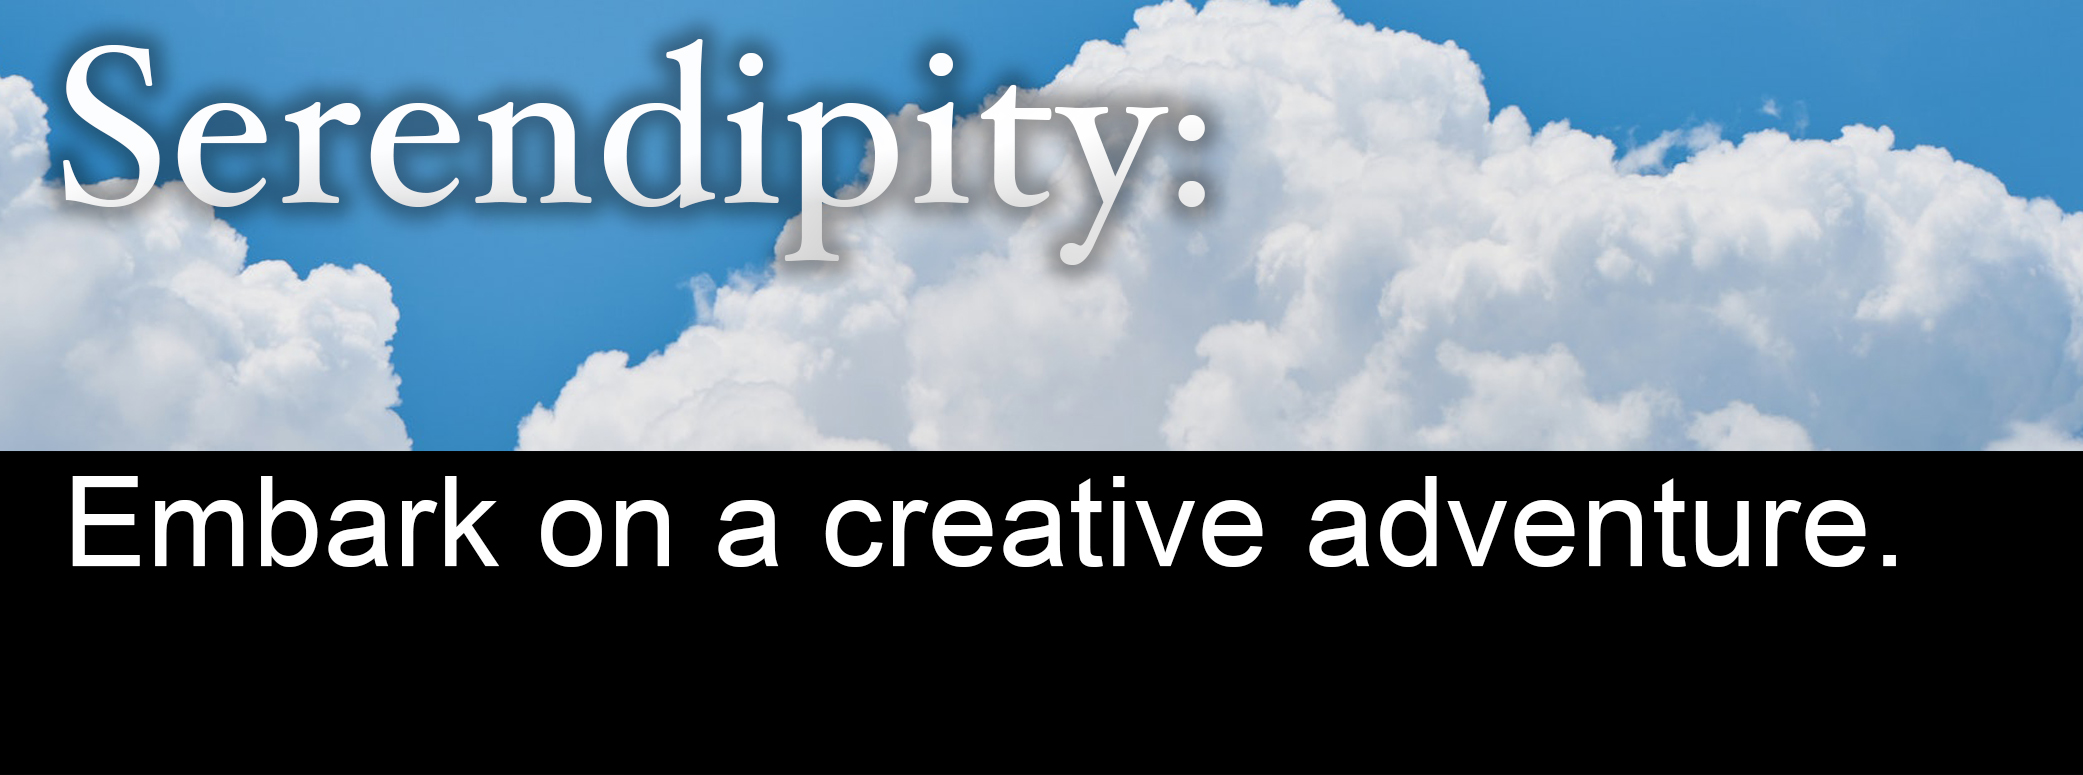 Serendipity: Embark on a creative adventure.